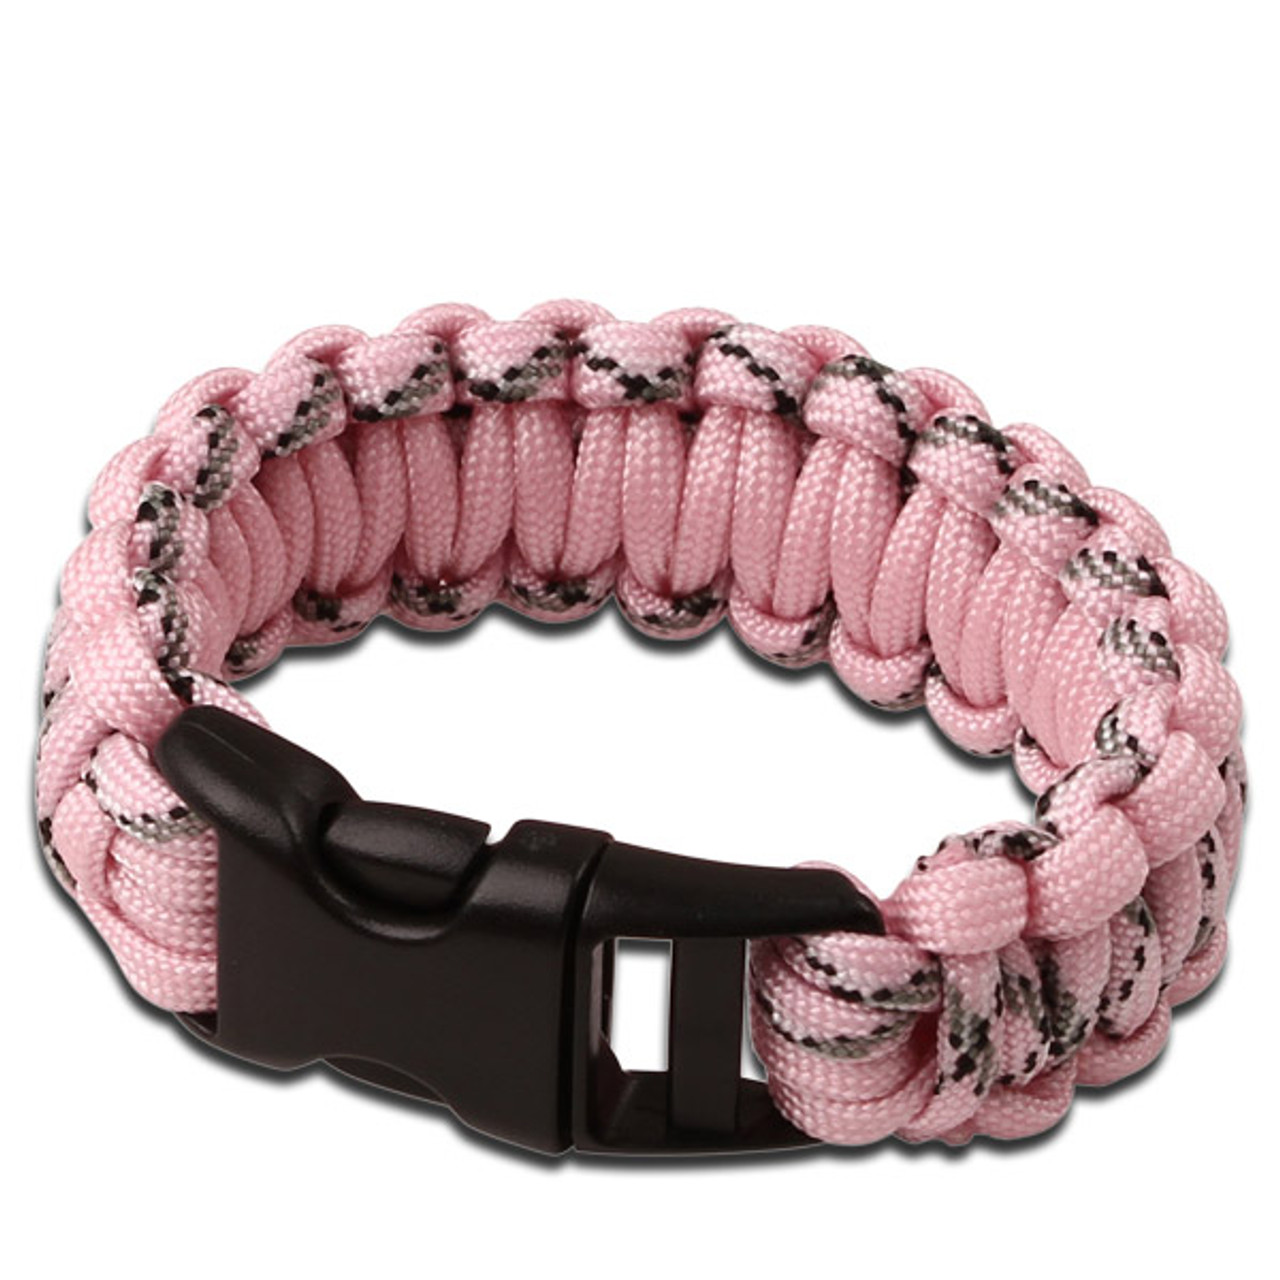 Paracord Survival Bracelet - 6 Inches - Pink